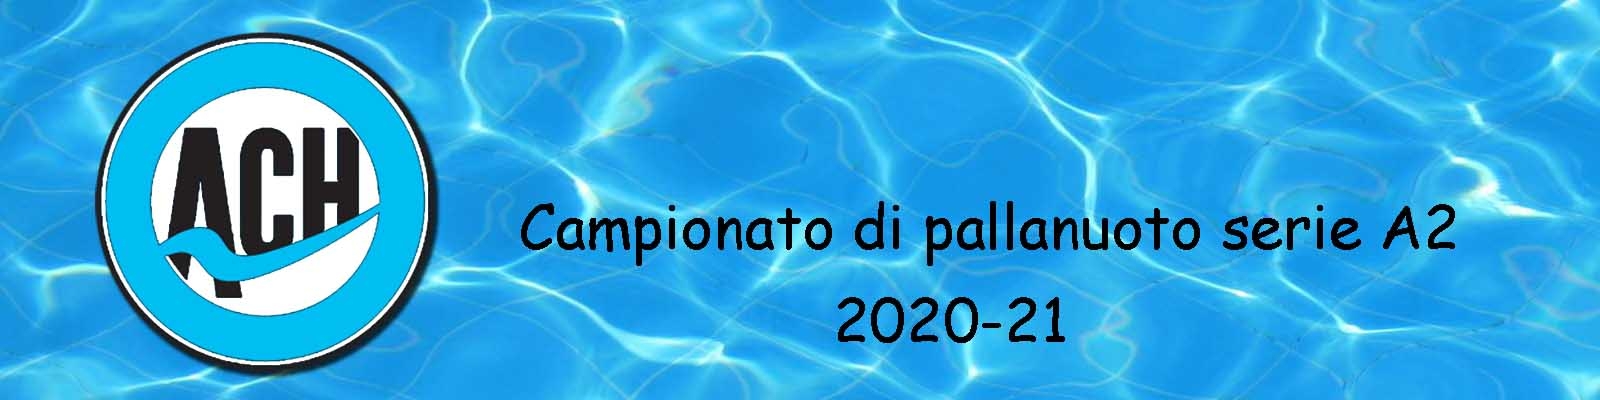 Acquachiara anno 2020-21